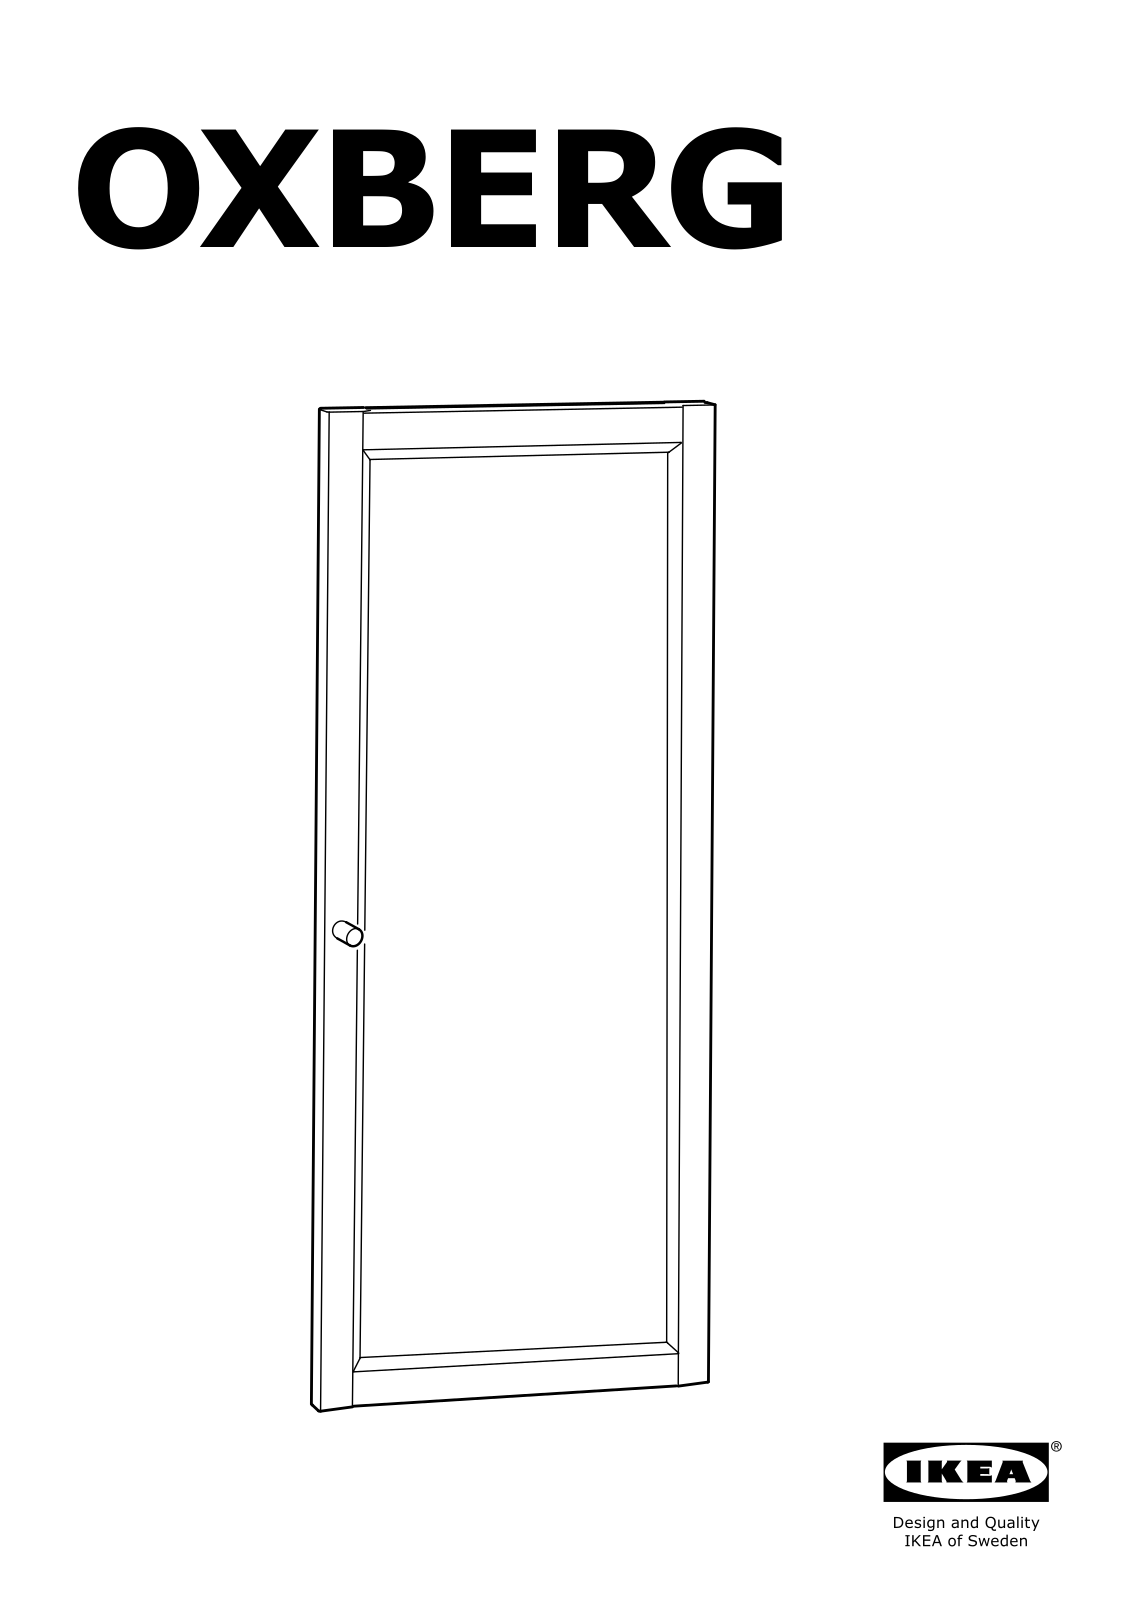 IKEA OXBERG User Manual